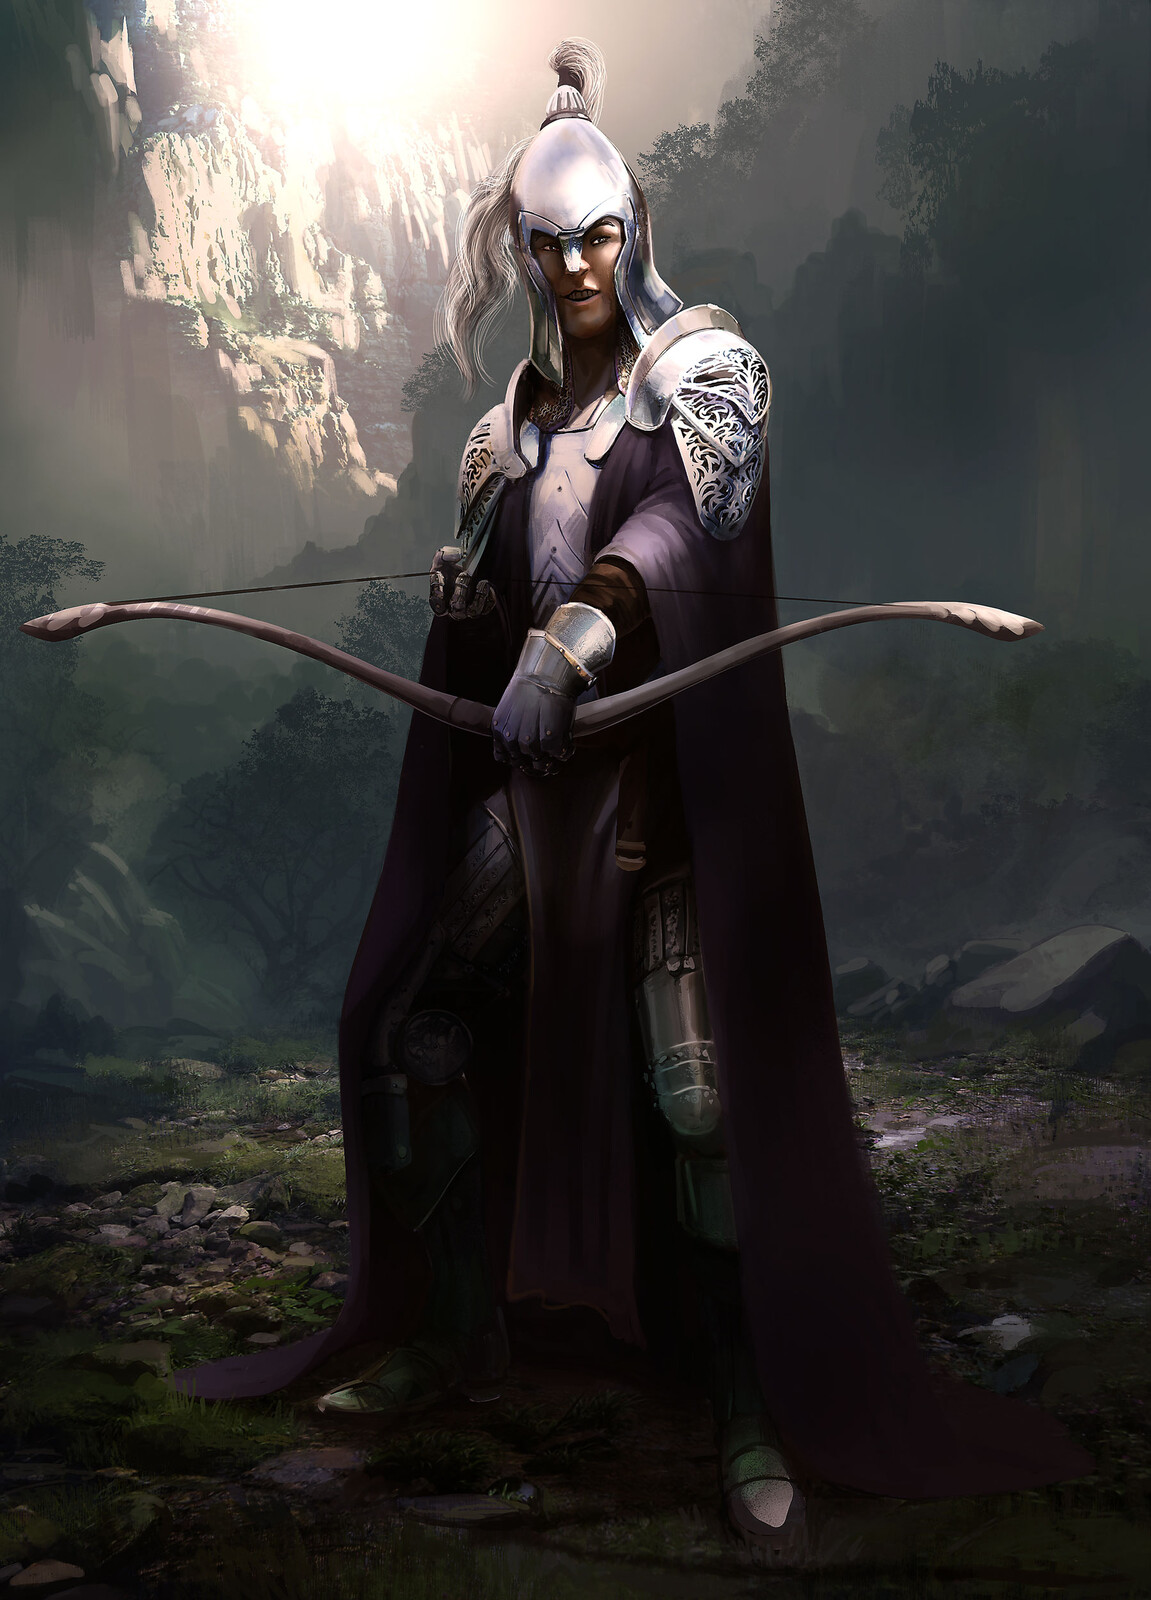 Gondolin silver gate guard - From the Silmarillion